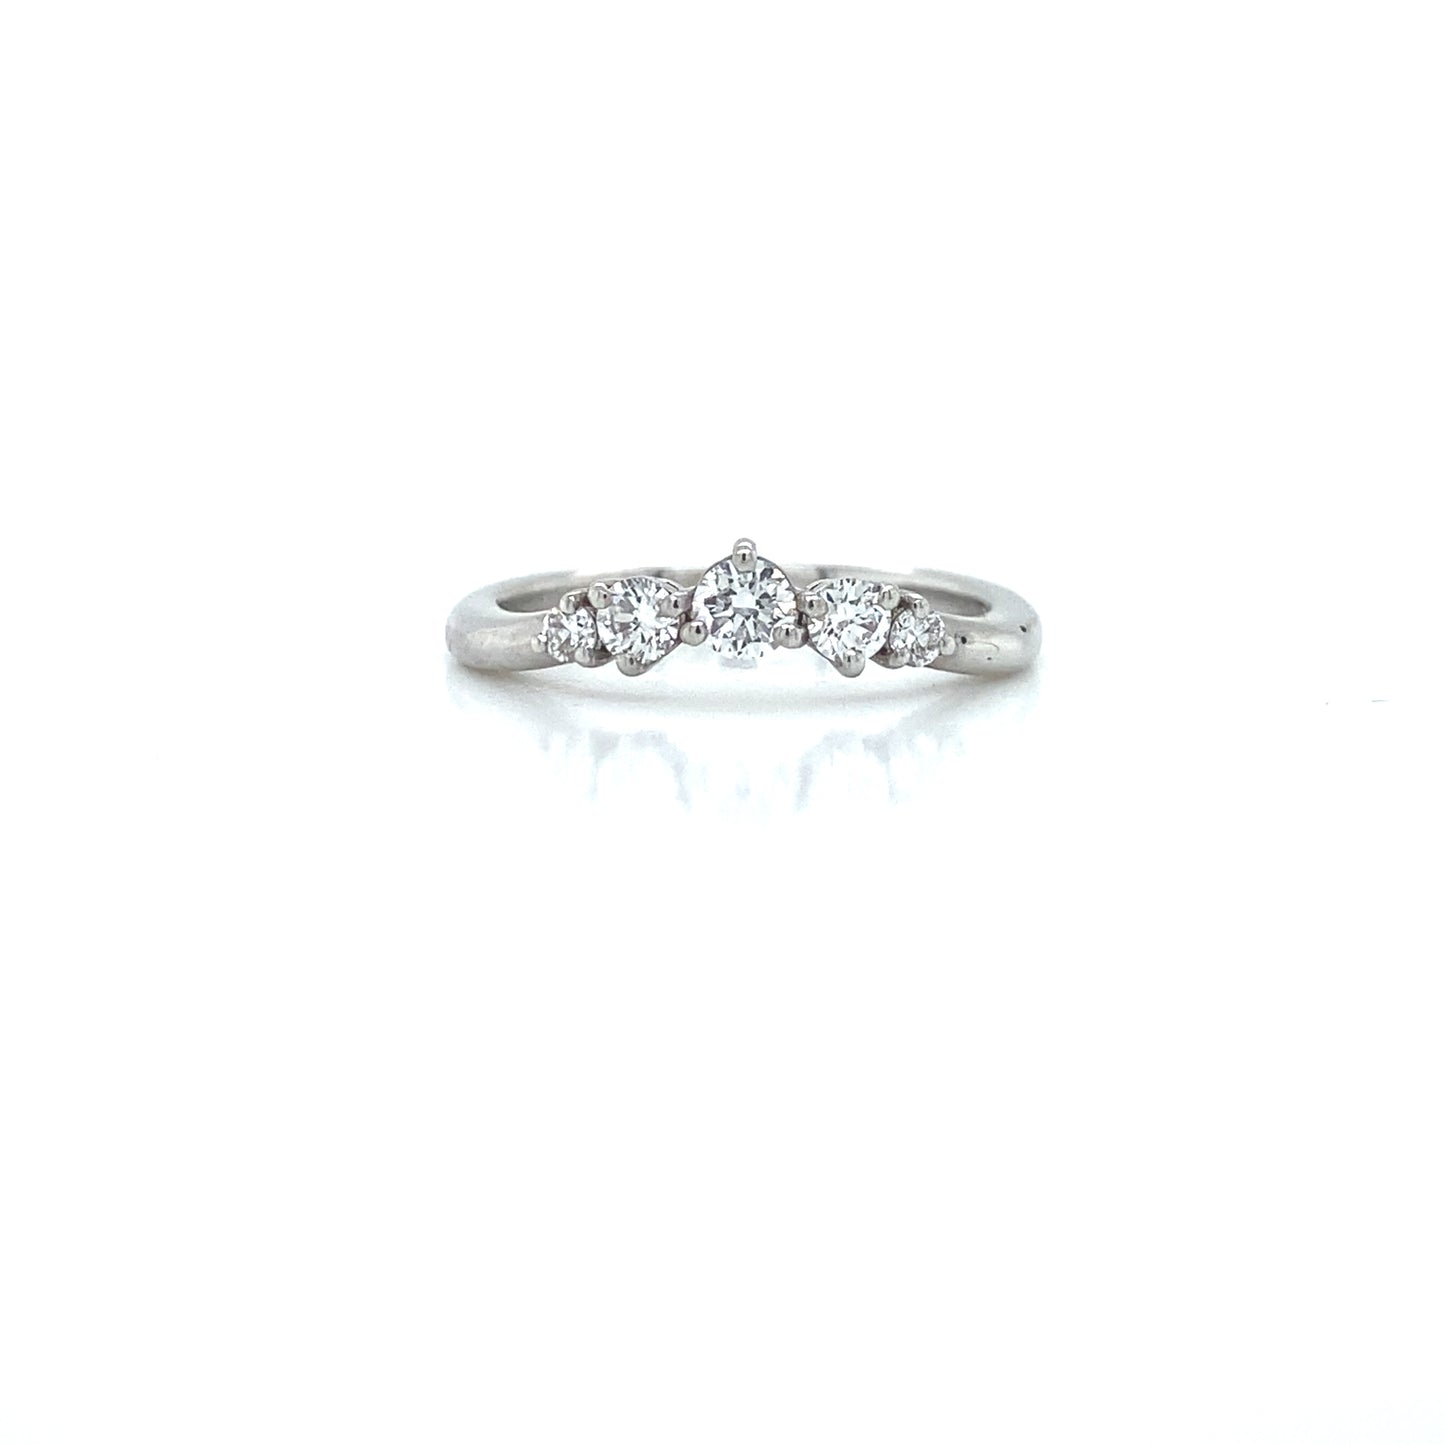 Five stone diamond wedding ring